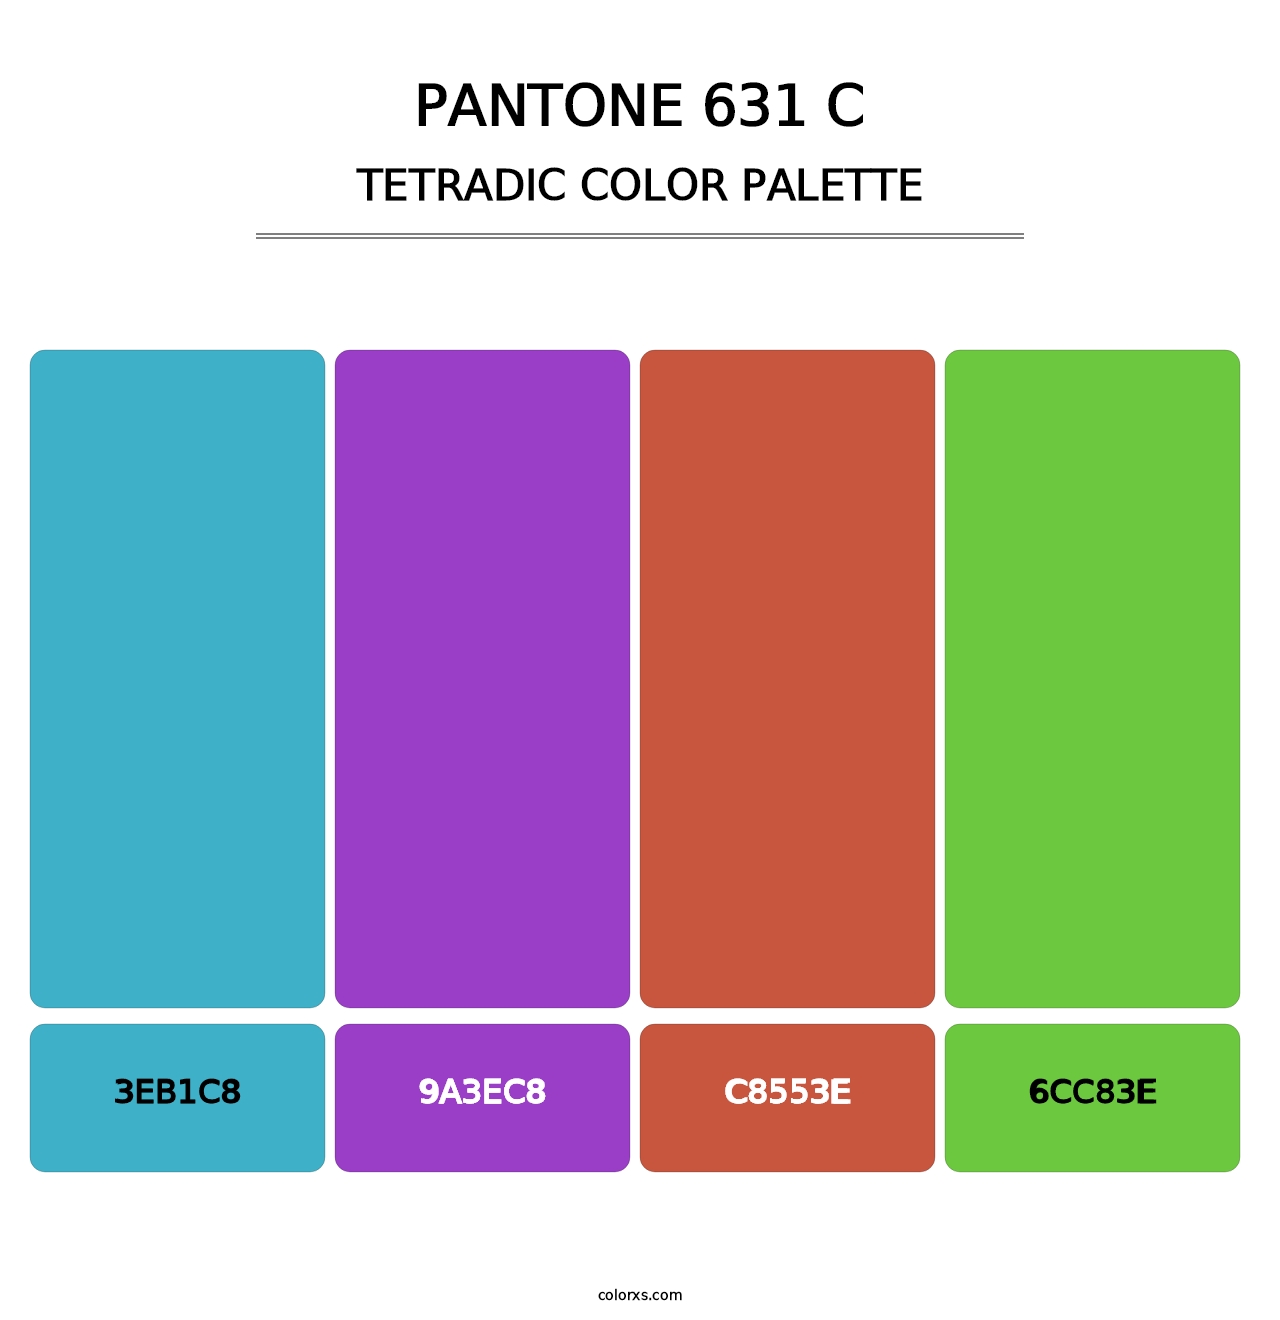 PANTONE 631 C - Tetradic Color Palette